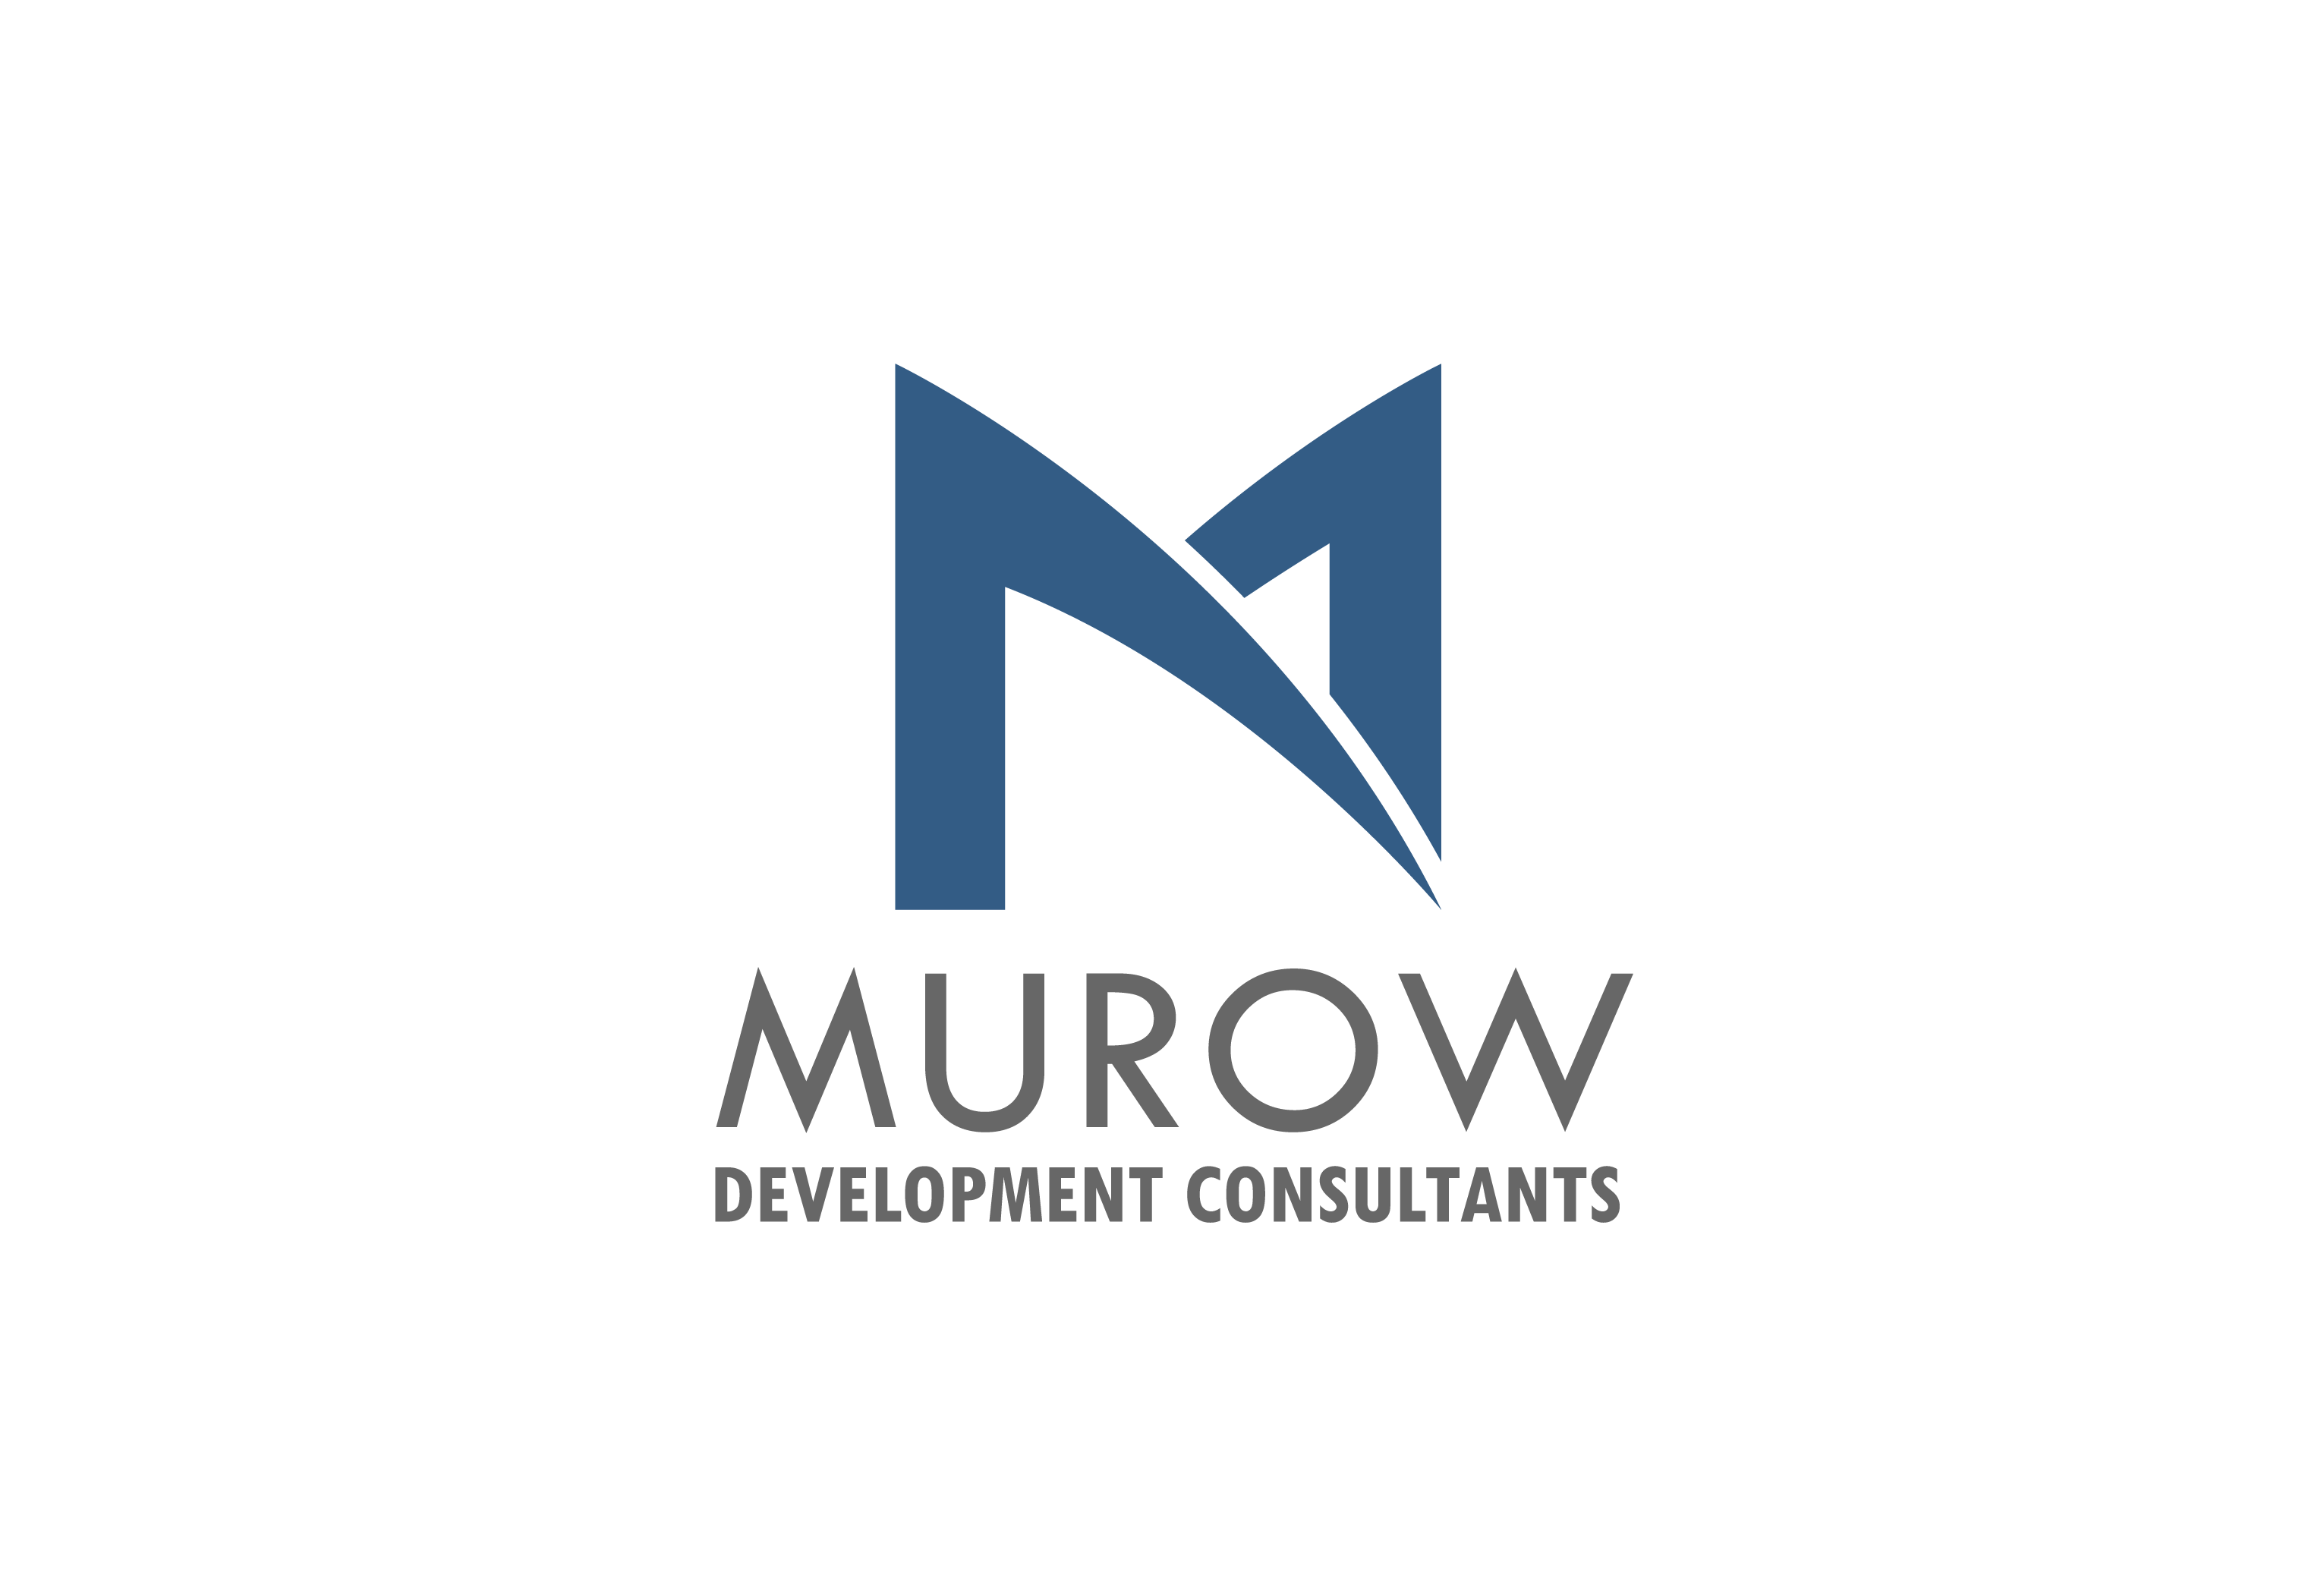 Murow Development Consultants logo